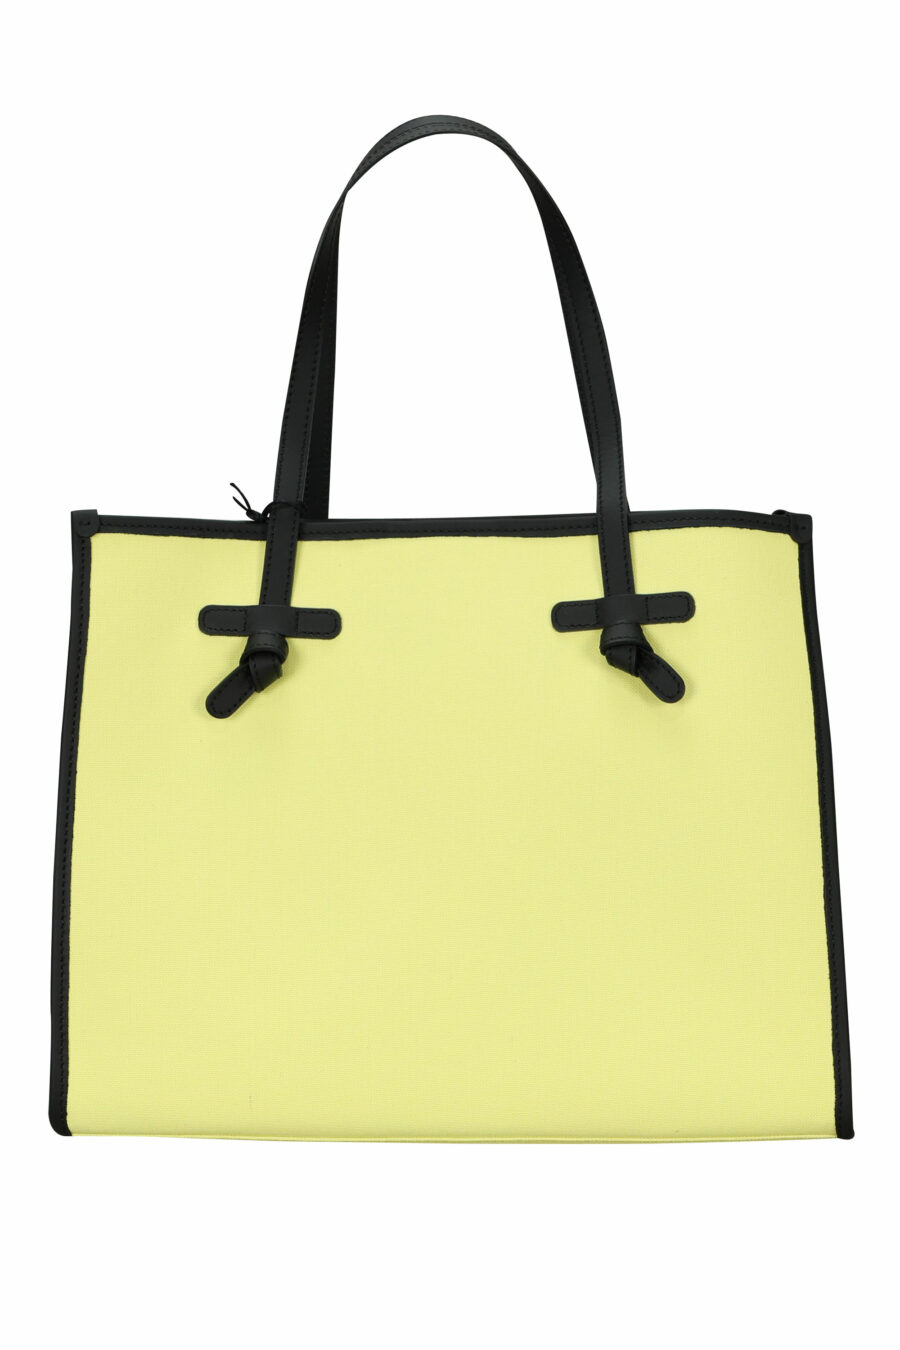 Shopper bag "Marcella" lime green and minilogo - 8057145223520 2